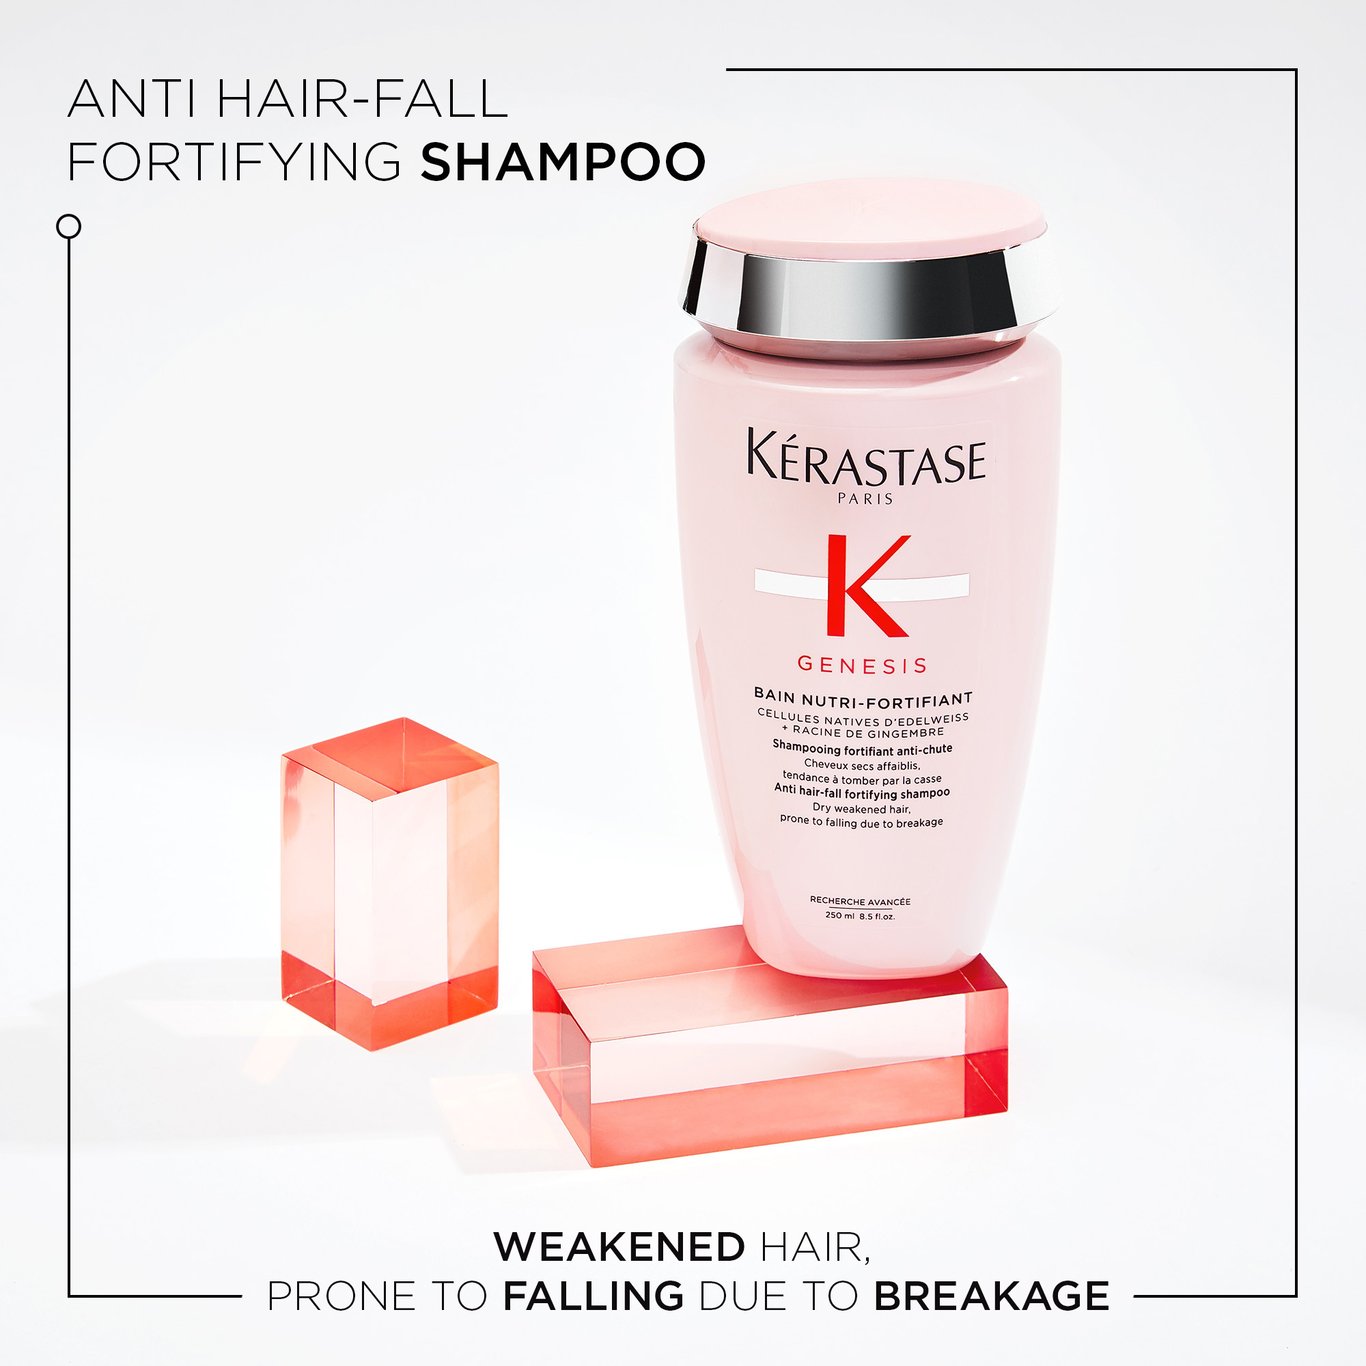 Anti hair-fall fortifying shampoo